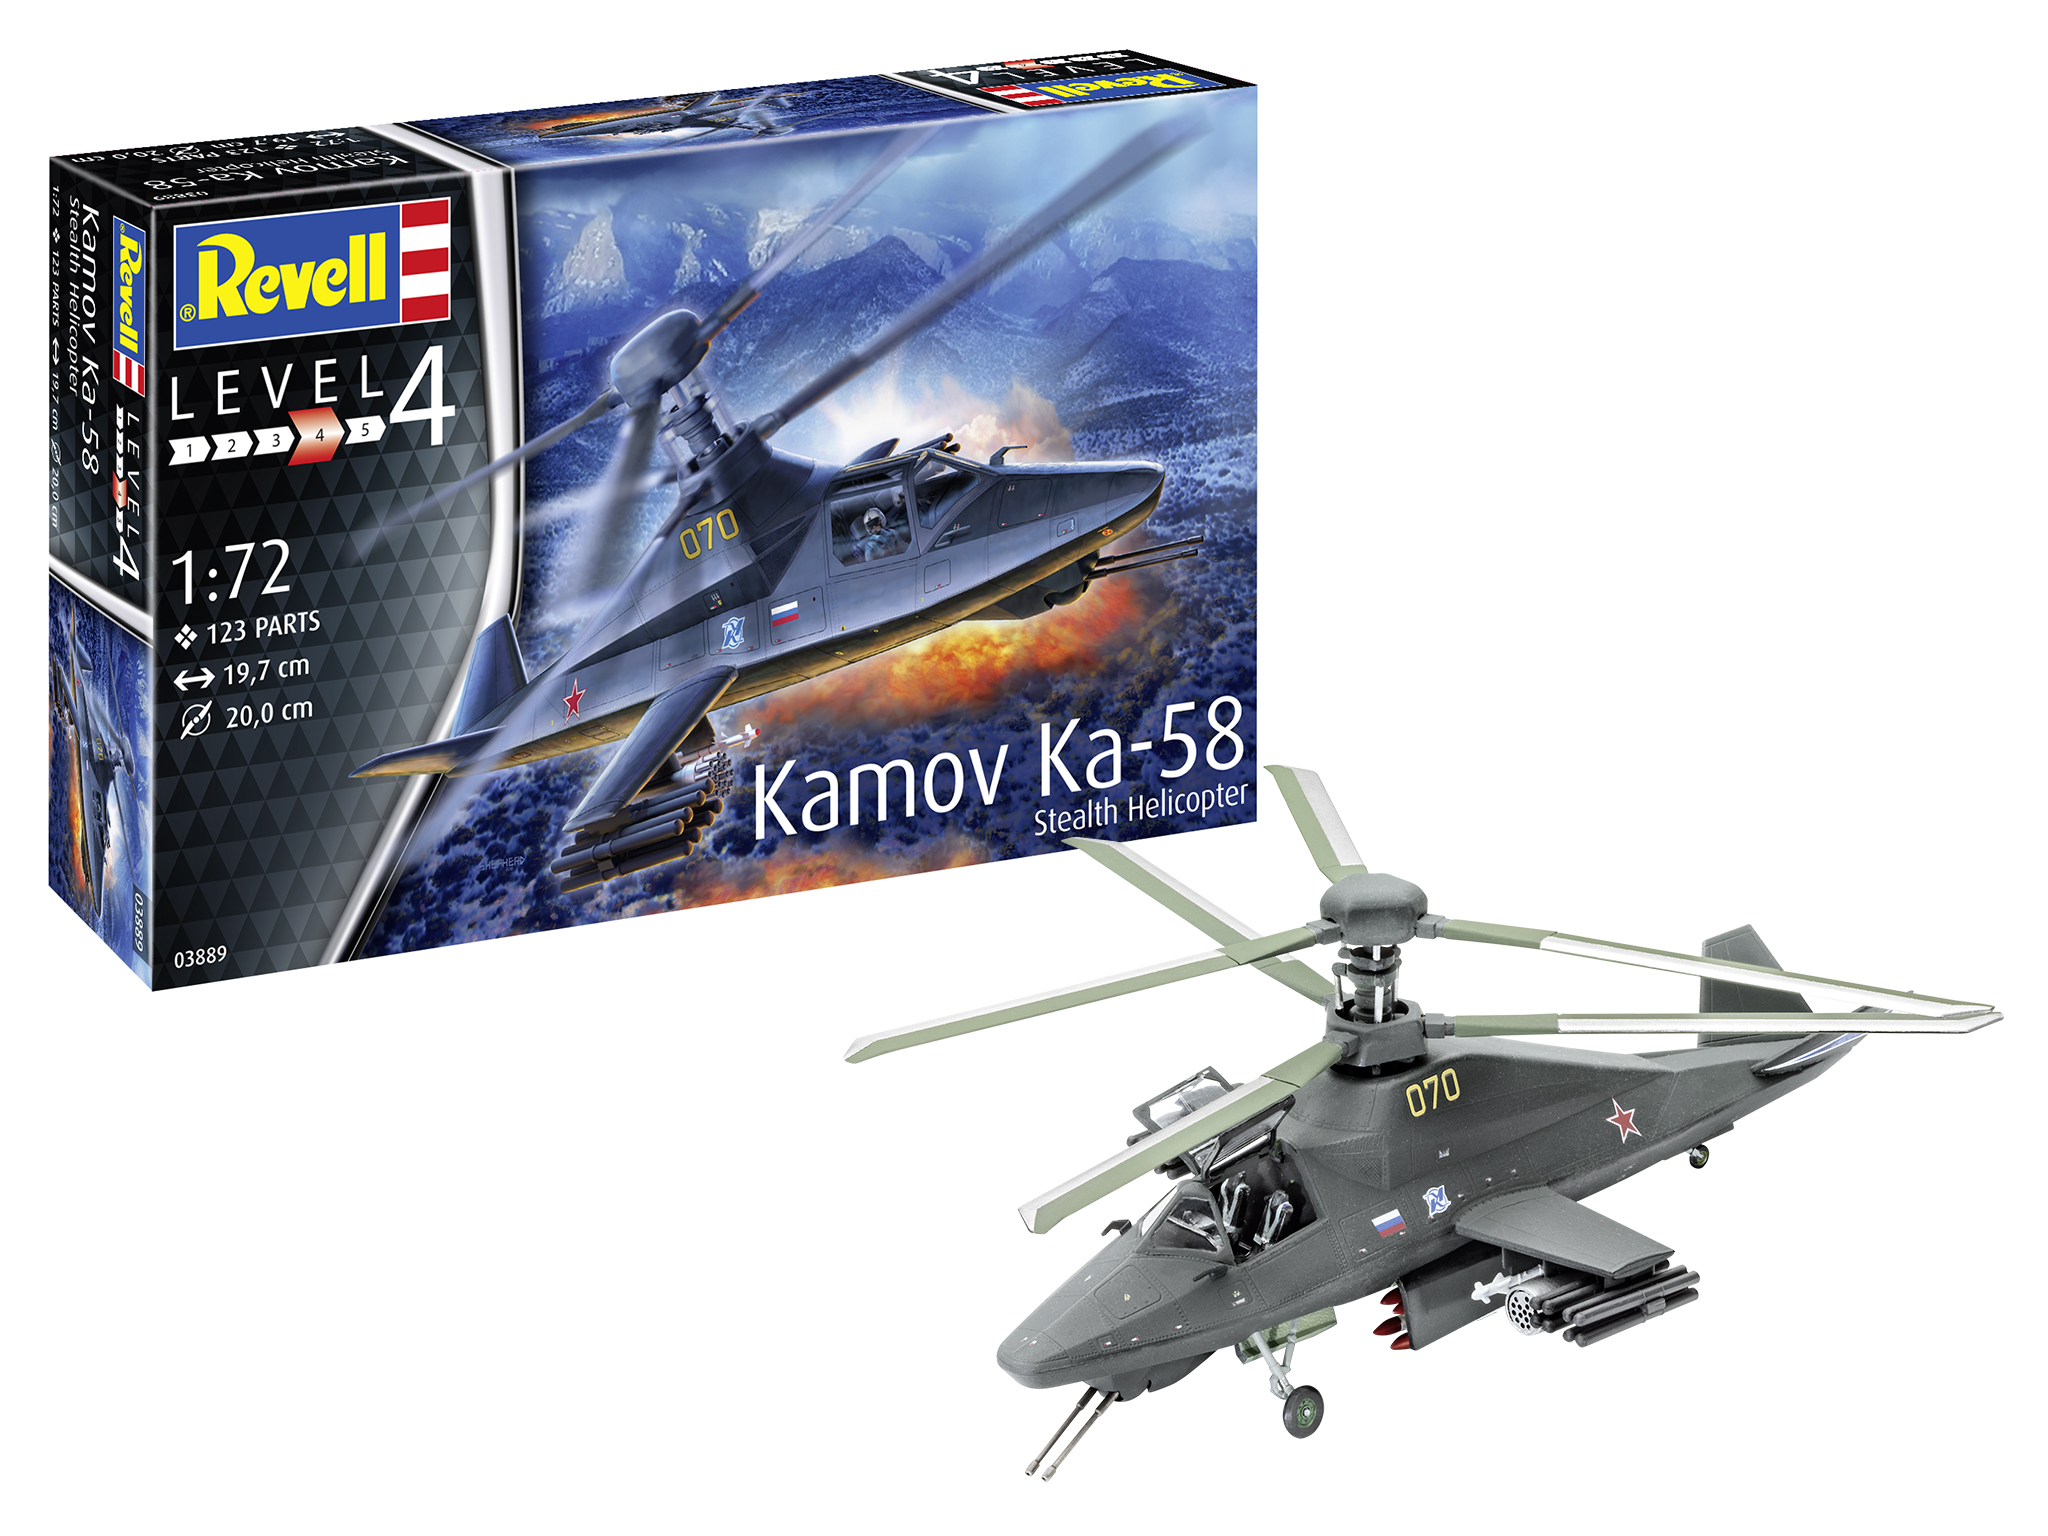 Revell Model Set Kamov Ka-58 Stealth in 1:72 bouwpakket met lijm en verf